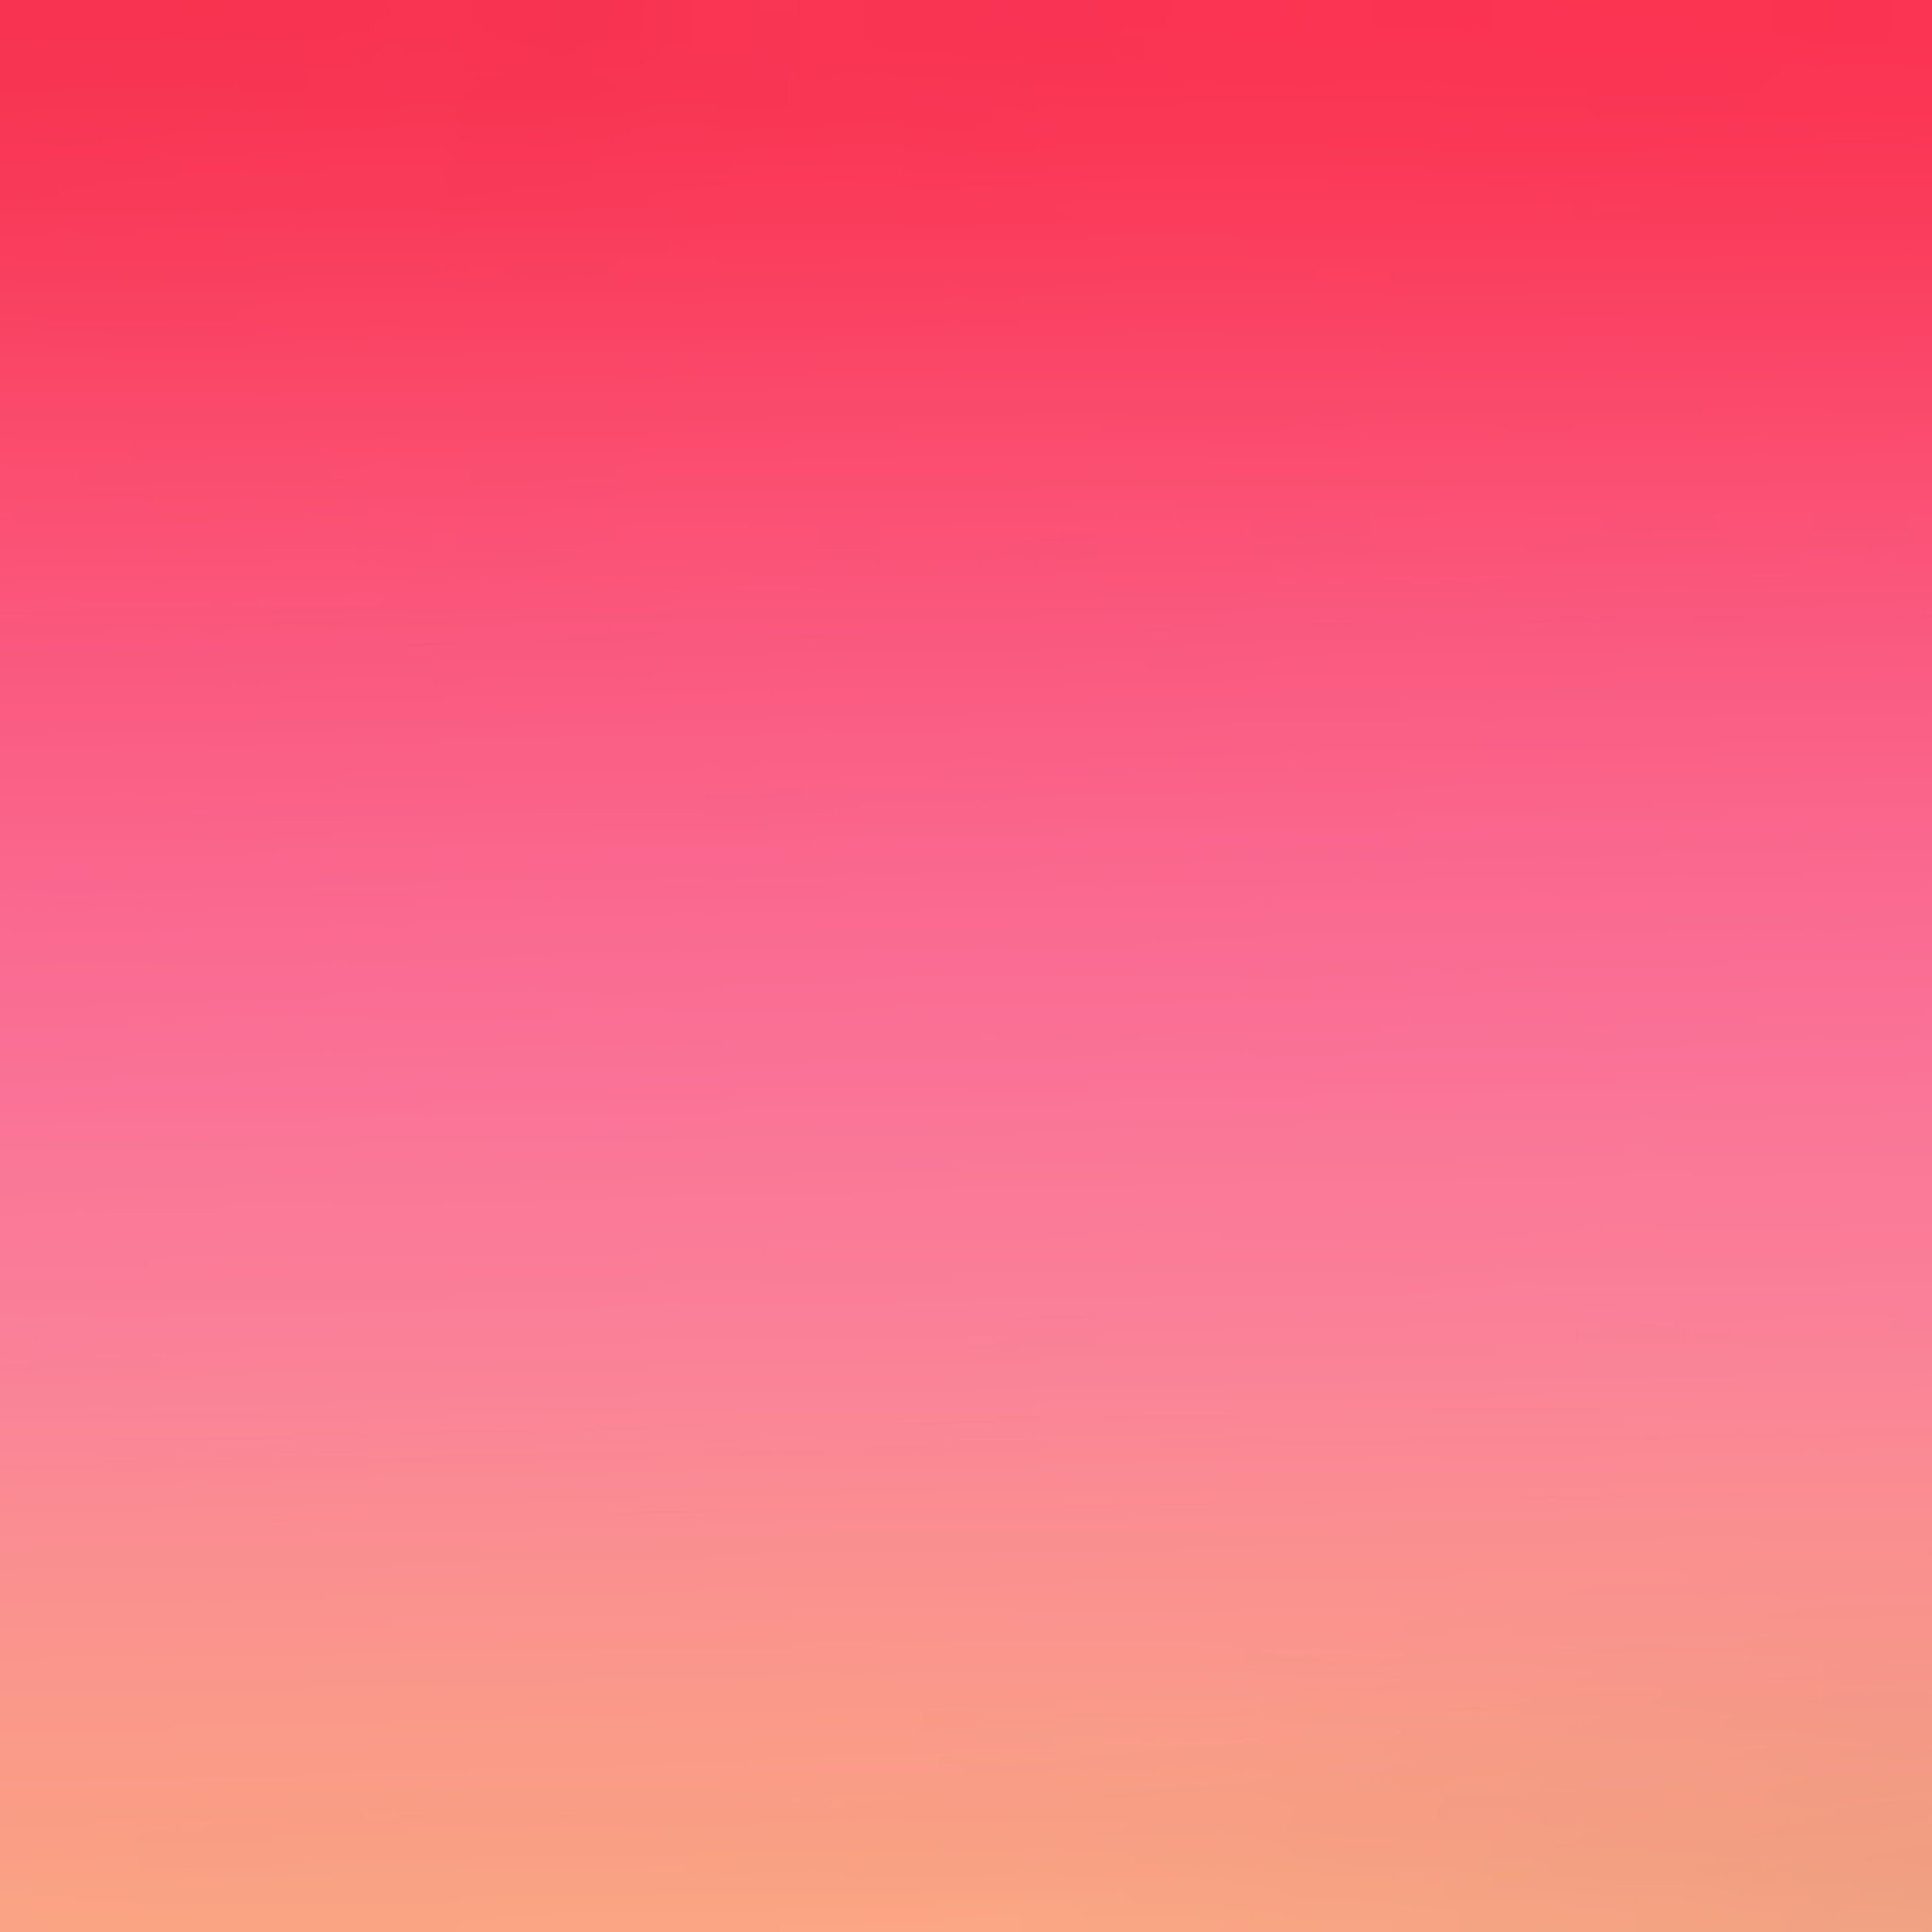 Download Variation - Ombre Pink And Orange - HD Wallpaper 